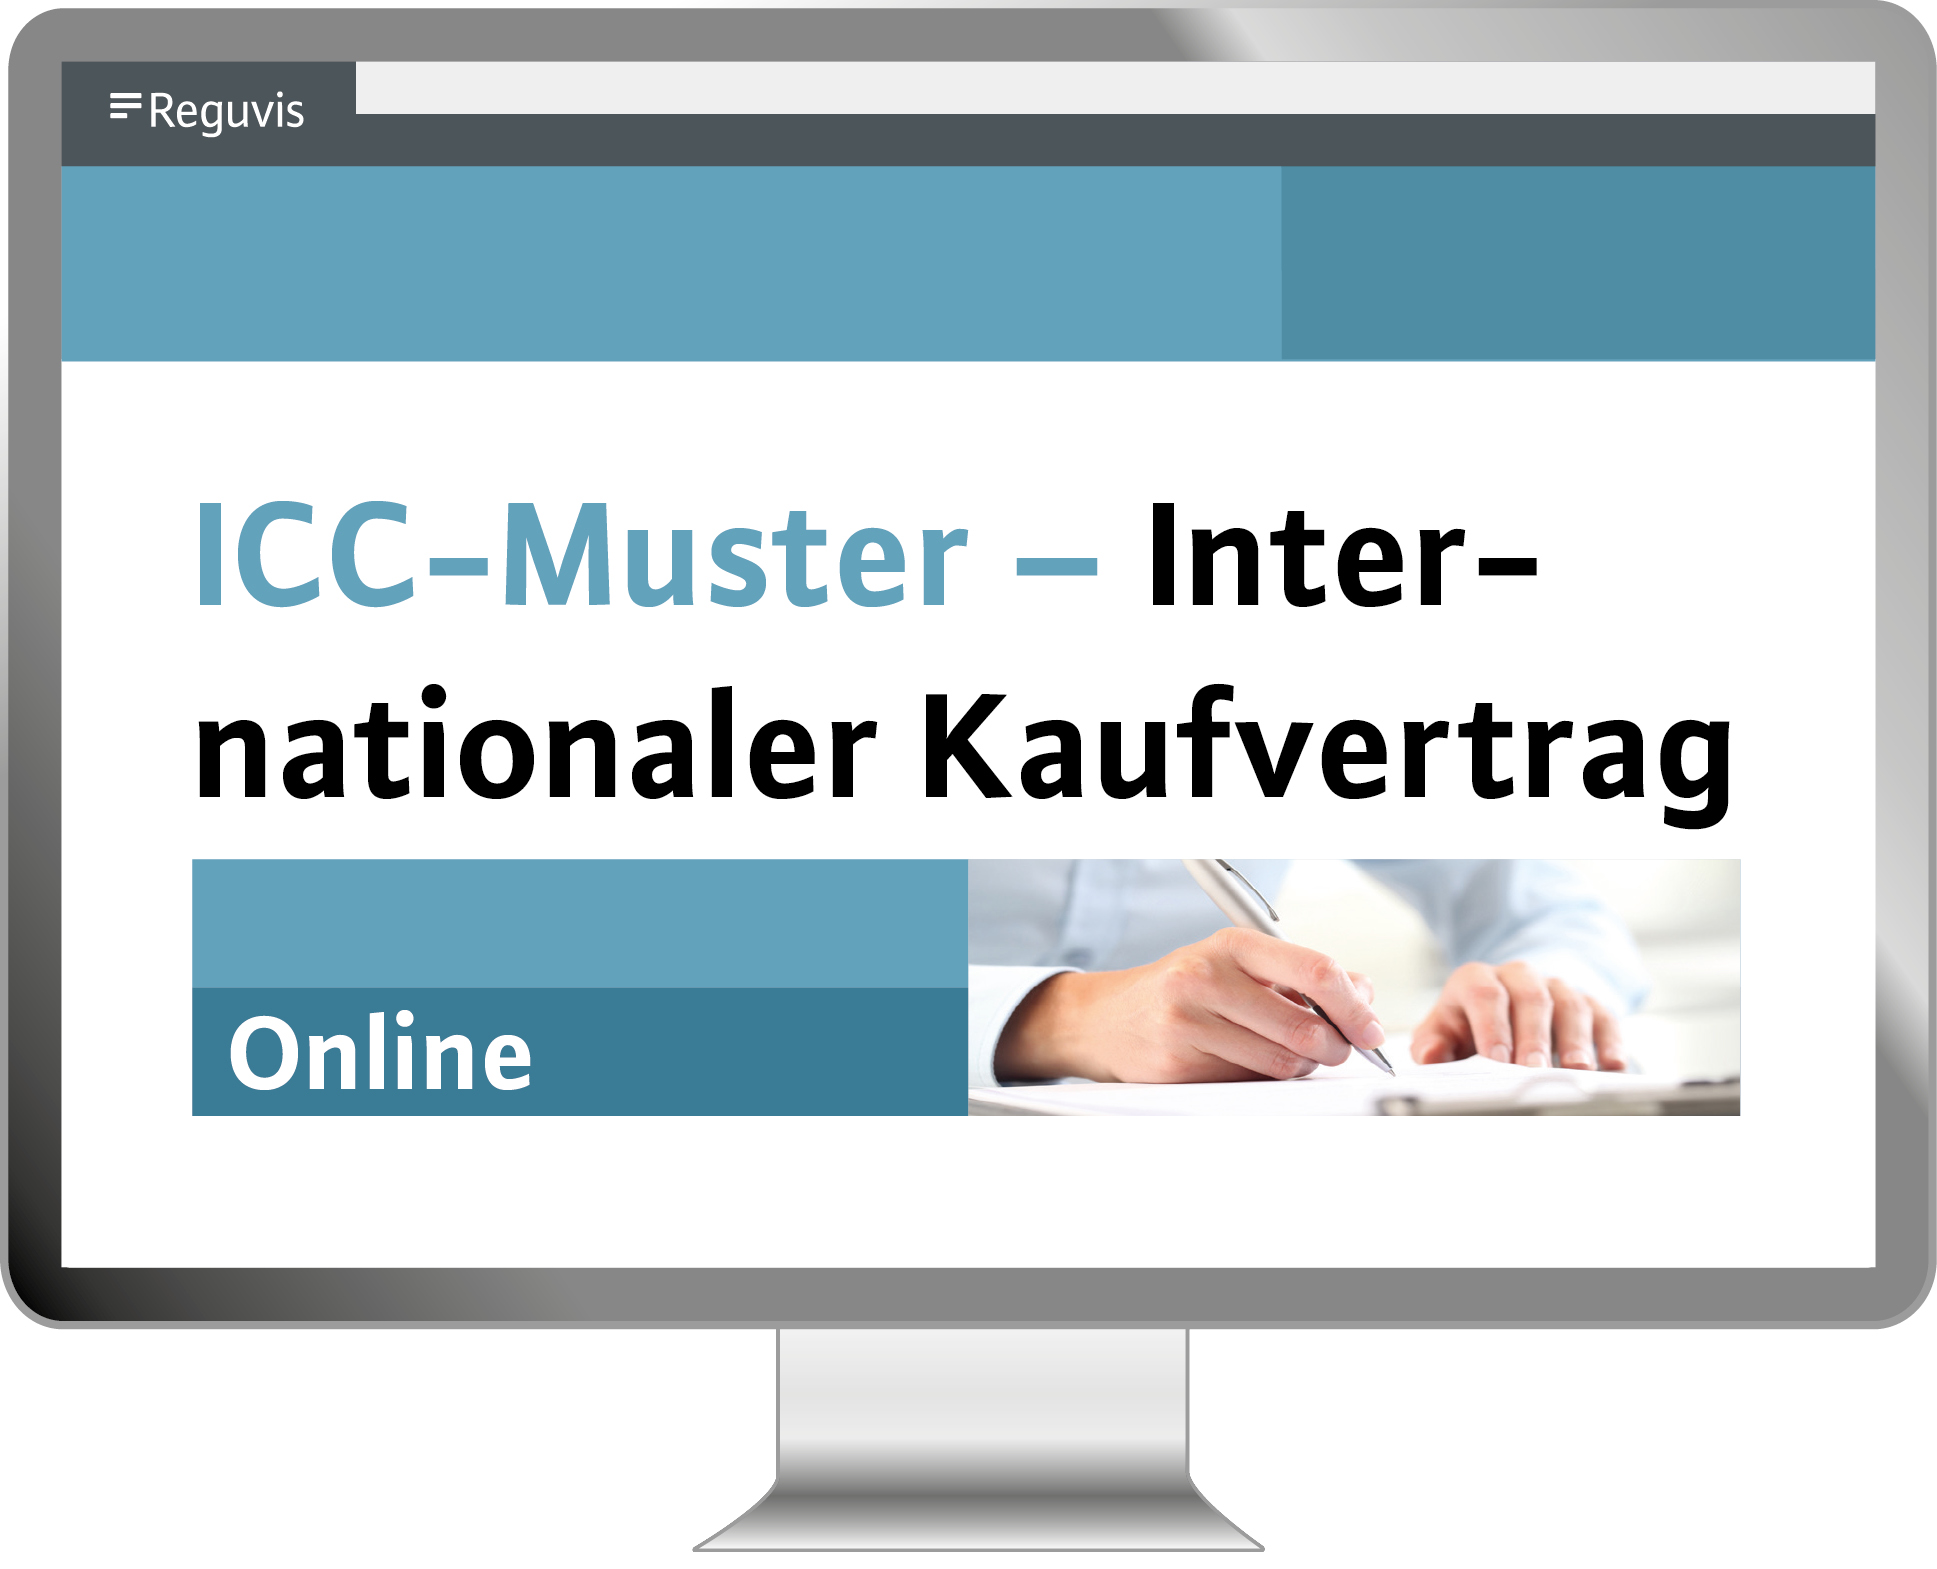 ICC-Muster Internationaler Kaufvertrag Online